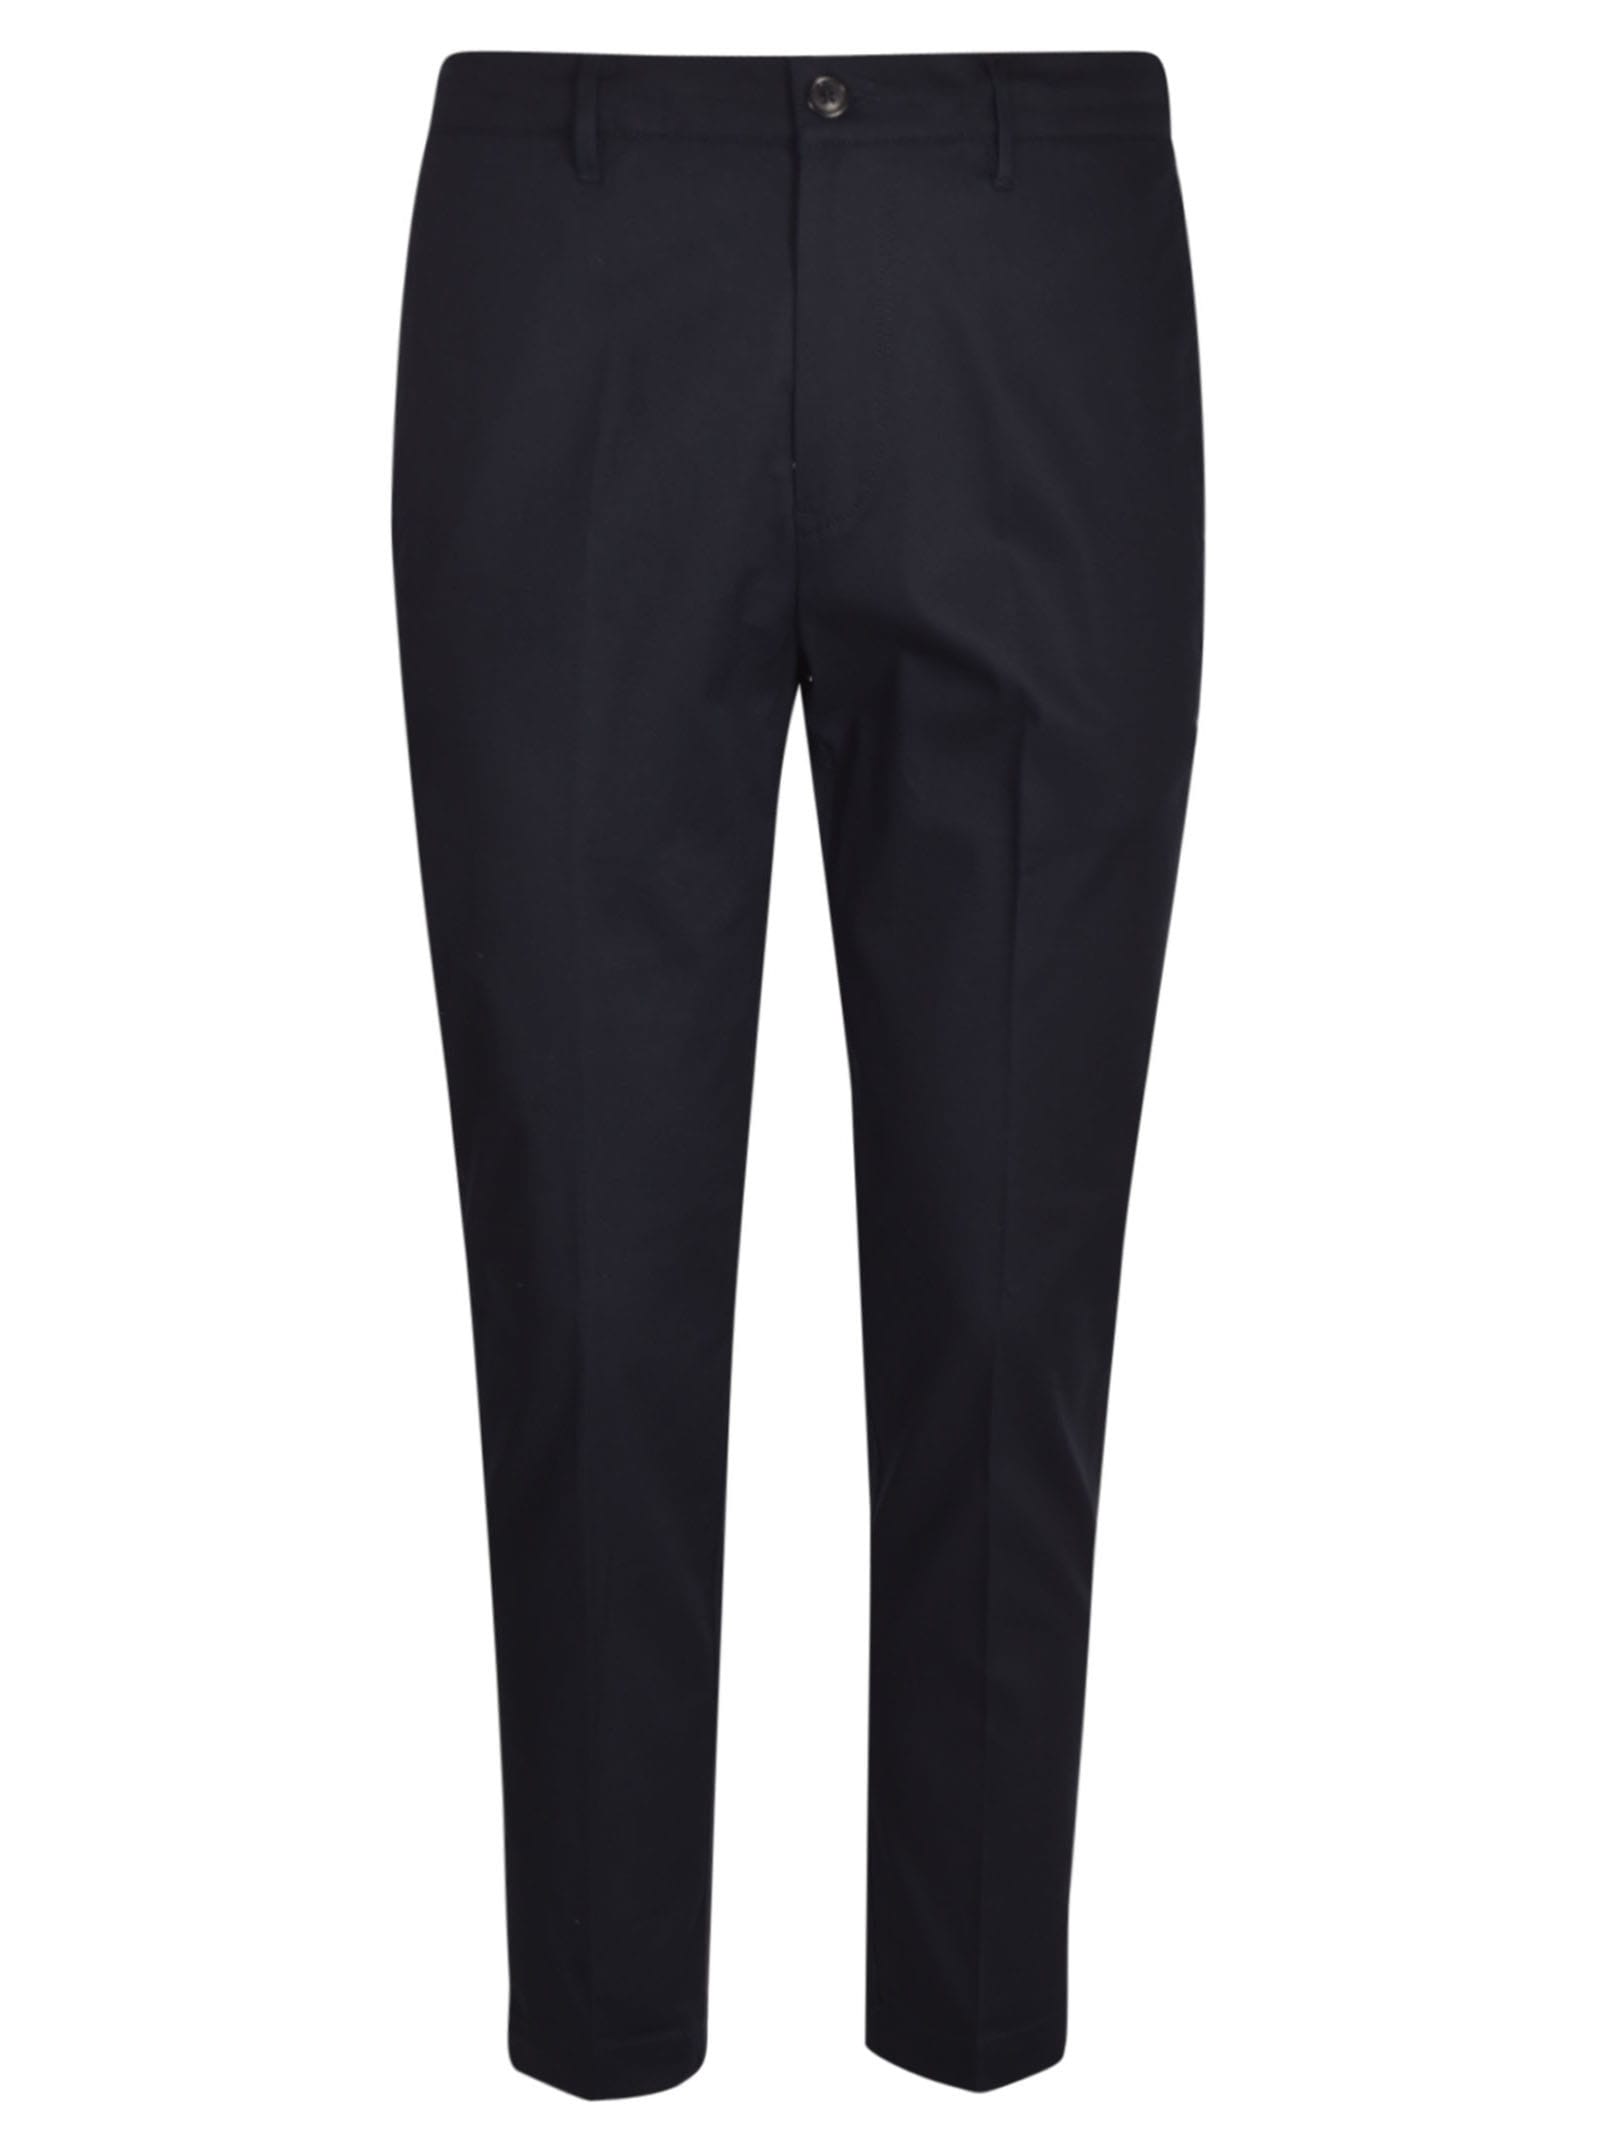 MAURO GRIFONI trousers,GI40011/29 582